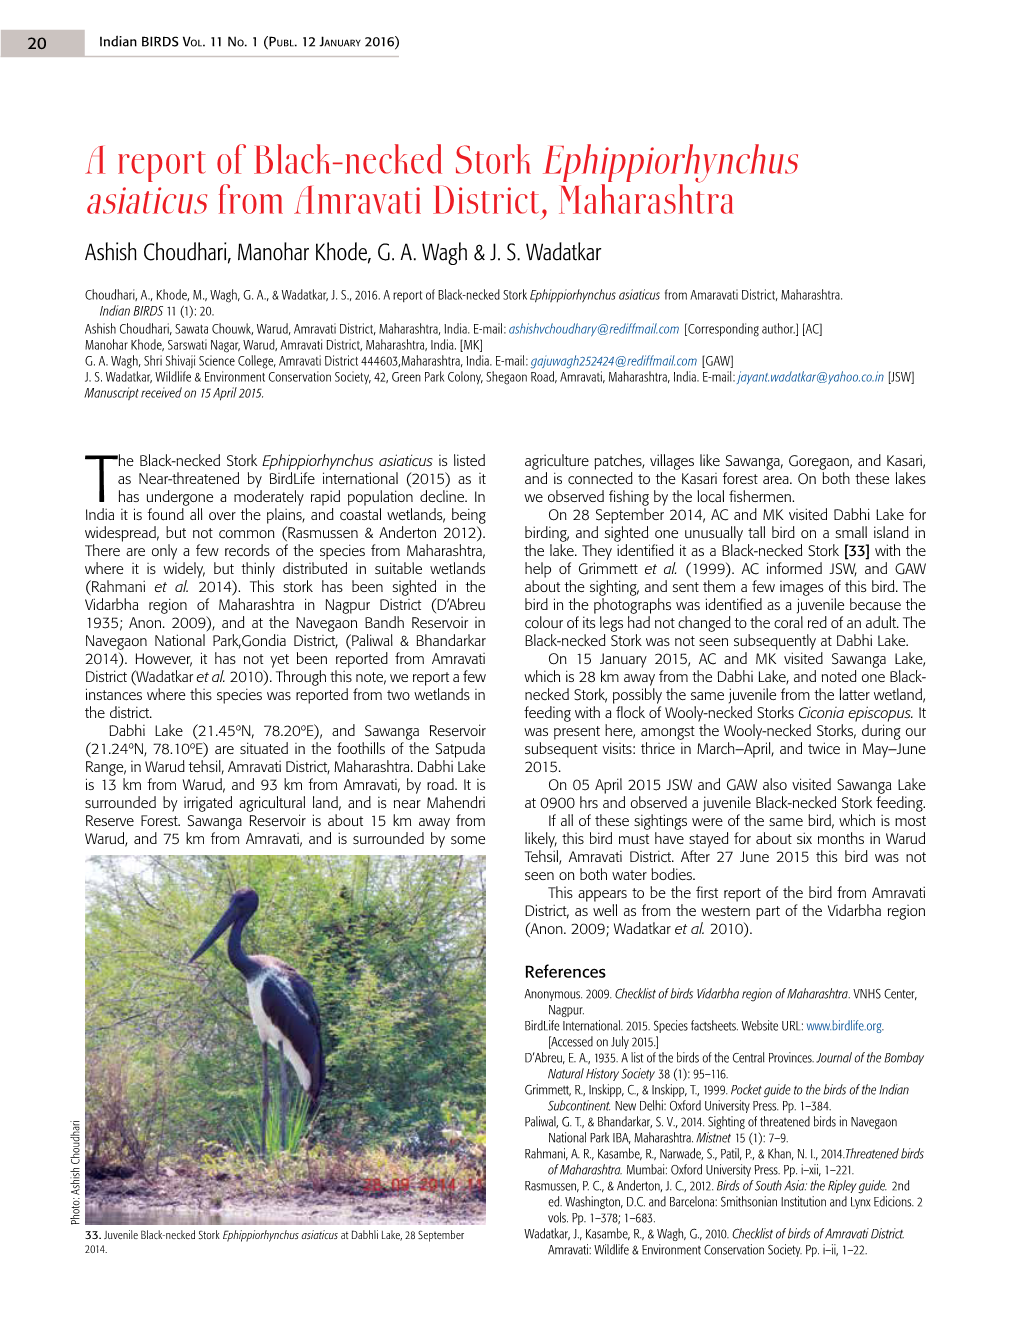 A Report of Black-Necked Stork Ephippiorhynchus Asiaticus from Amravati District, Maharashtra Ashish Choudhari, Manohar Khode, G